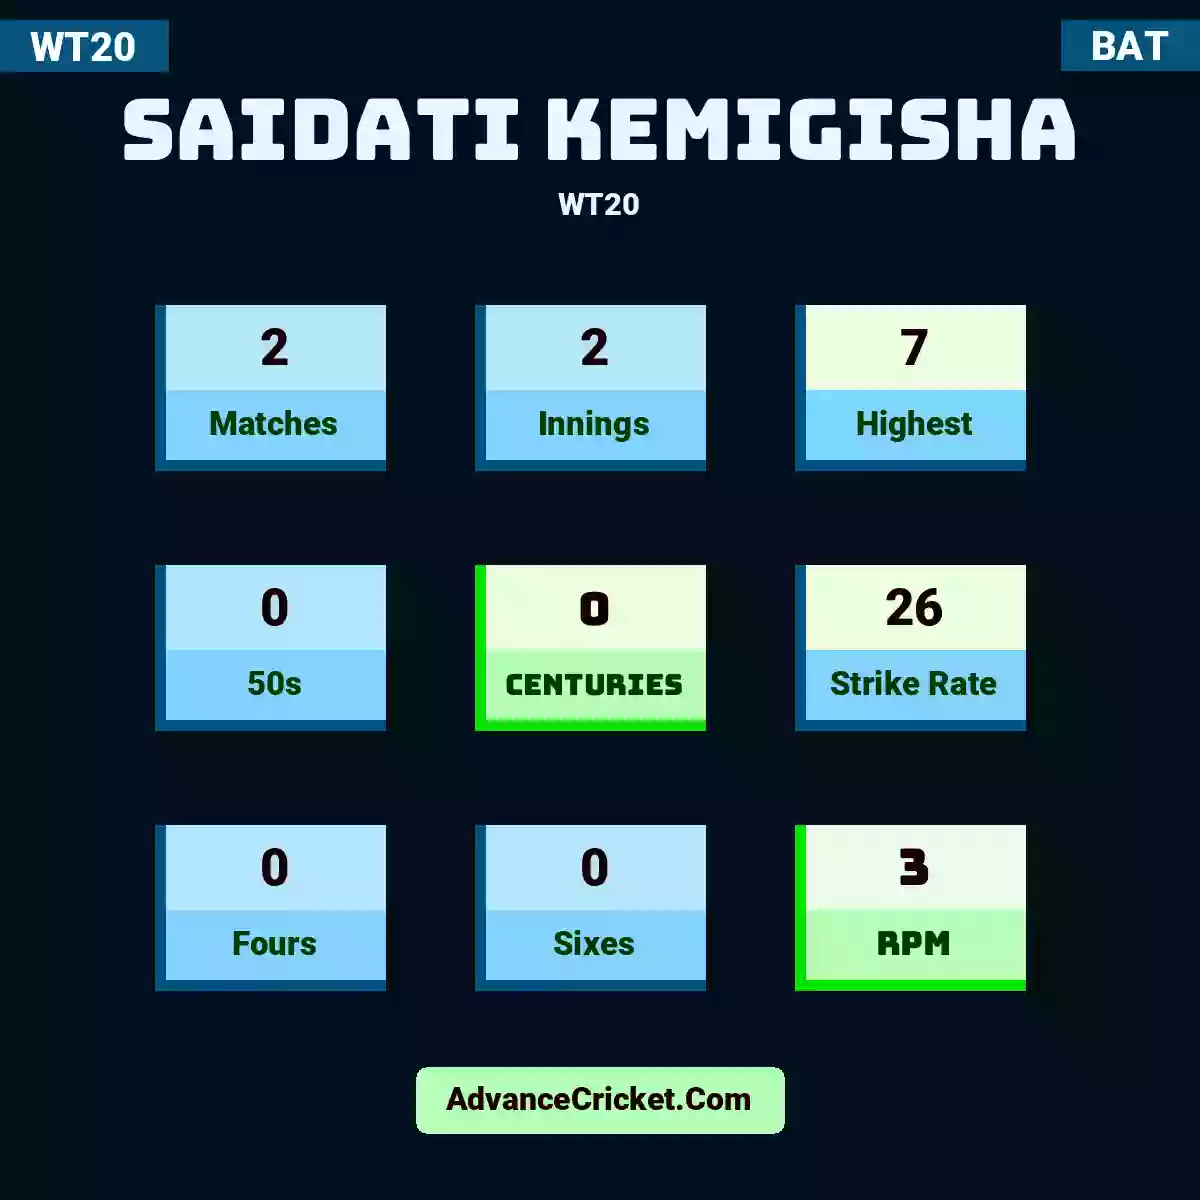 Saidati Kemigisha WT20 , Saidati Kemigisha played 2 matches, scored 7 runs as highest, 0 half-centuries, and 0 centuries, with a strike rate of 26. S.Kemigisha hit 0 fours and 0 sixes, with an RPM of 3.